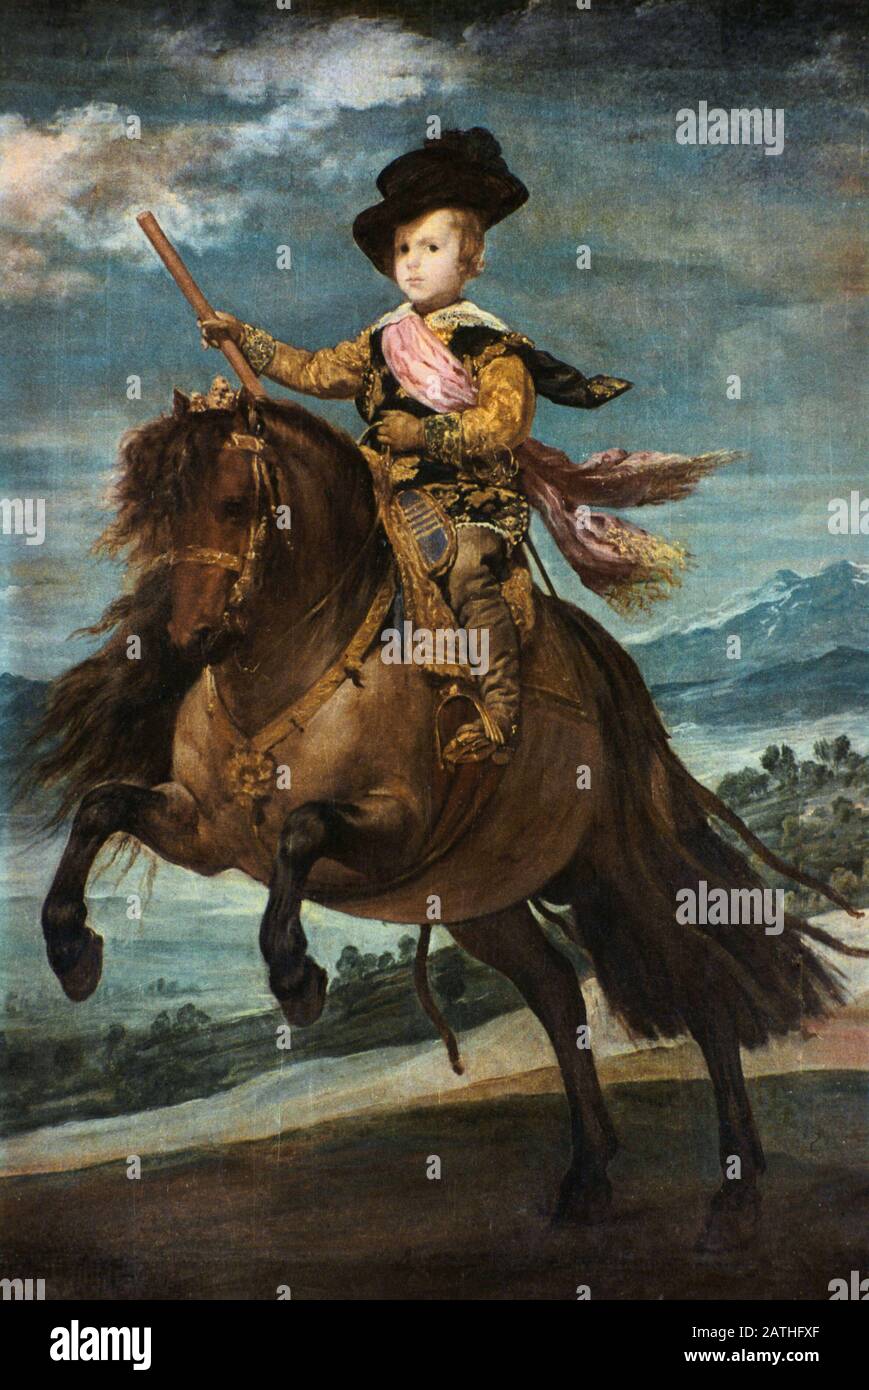 Diego Velazquez Spanish School Equestrian Portrait von Prinz Balthasar Charles El principe Baltasar Carlos, ein Caballo-Öl auf Leinwand (211,5 x 177 cm) c.1635 Madrid, Museo del Prado Stockfoto